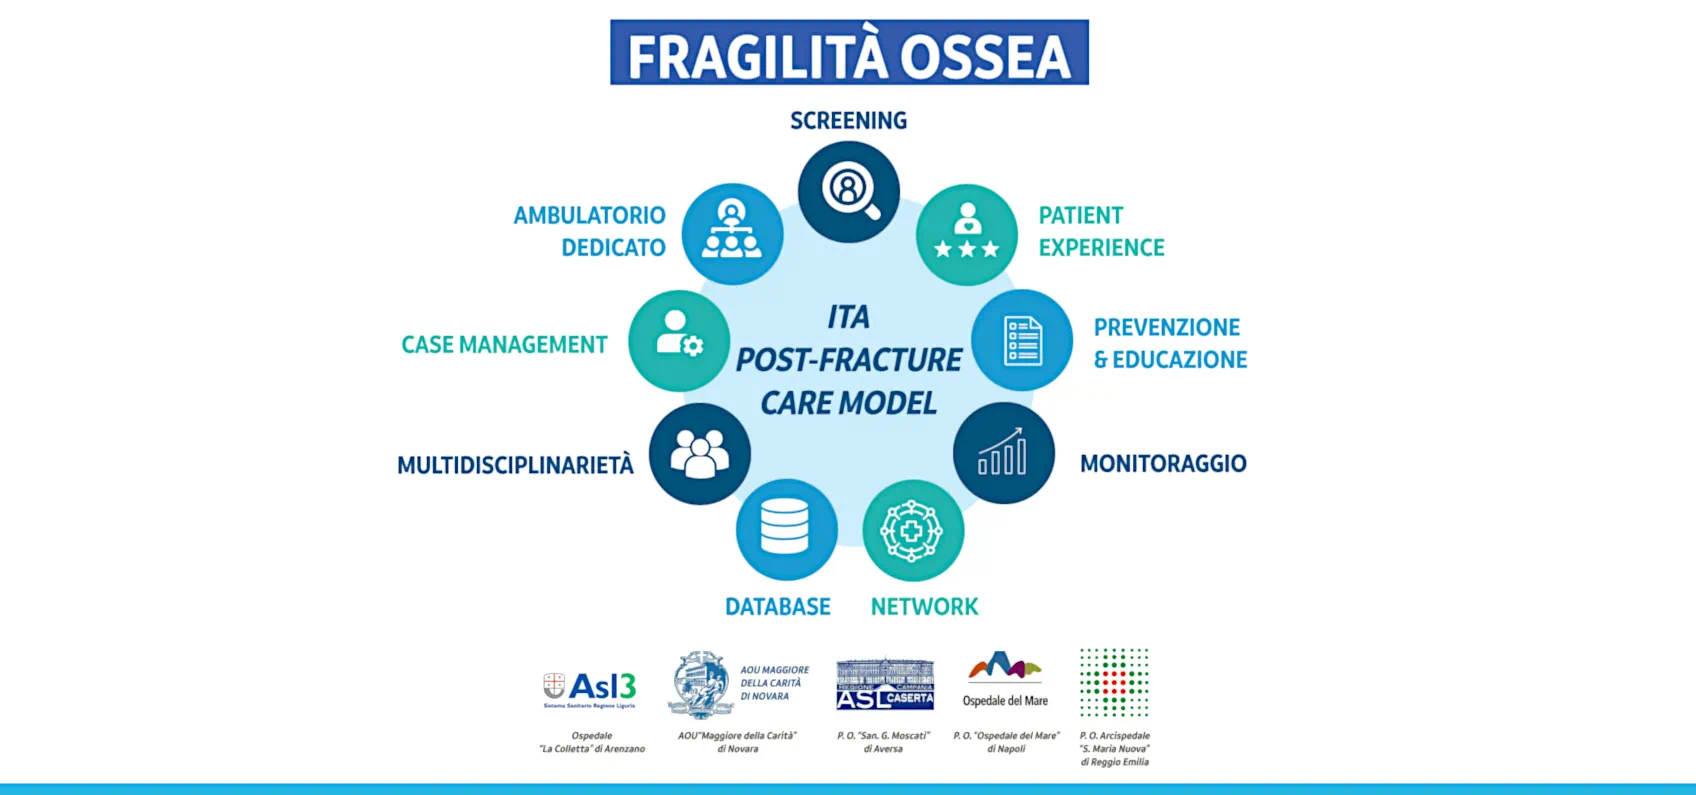 fragilita-ossea-max2-1696x795